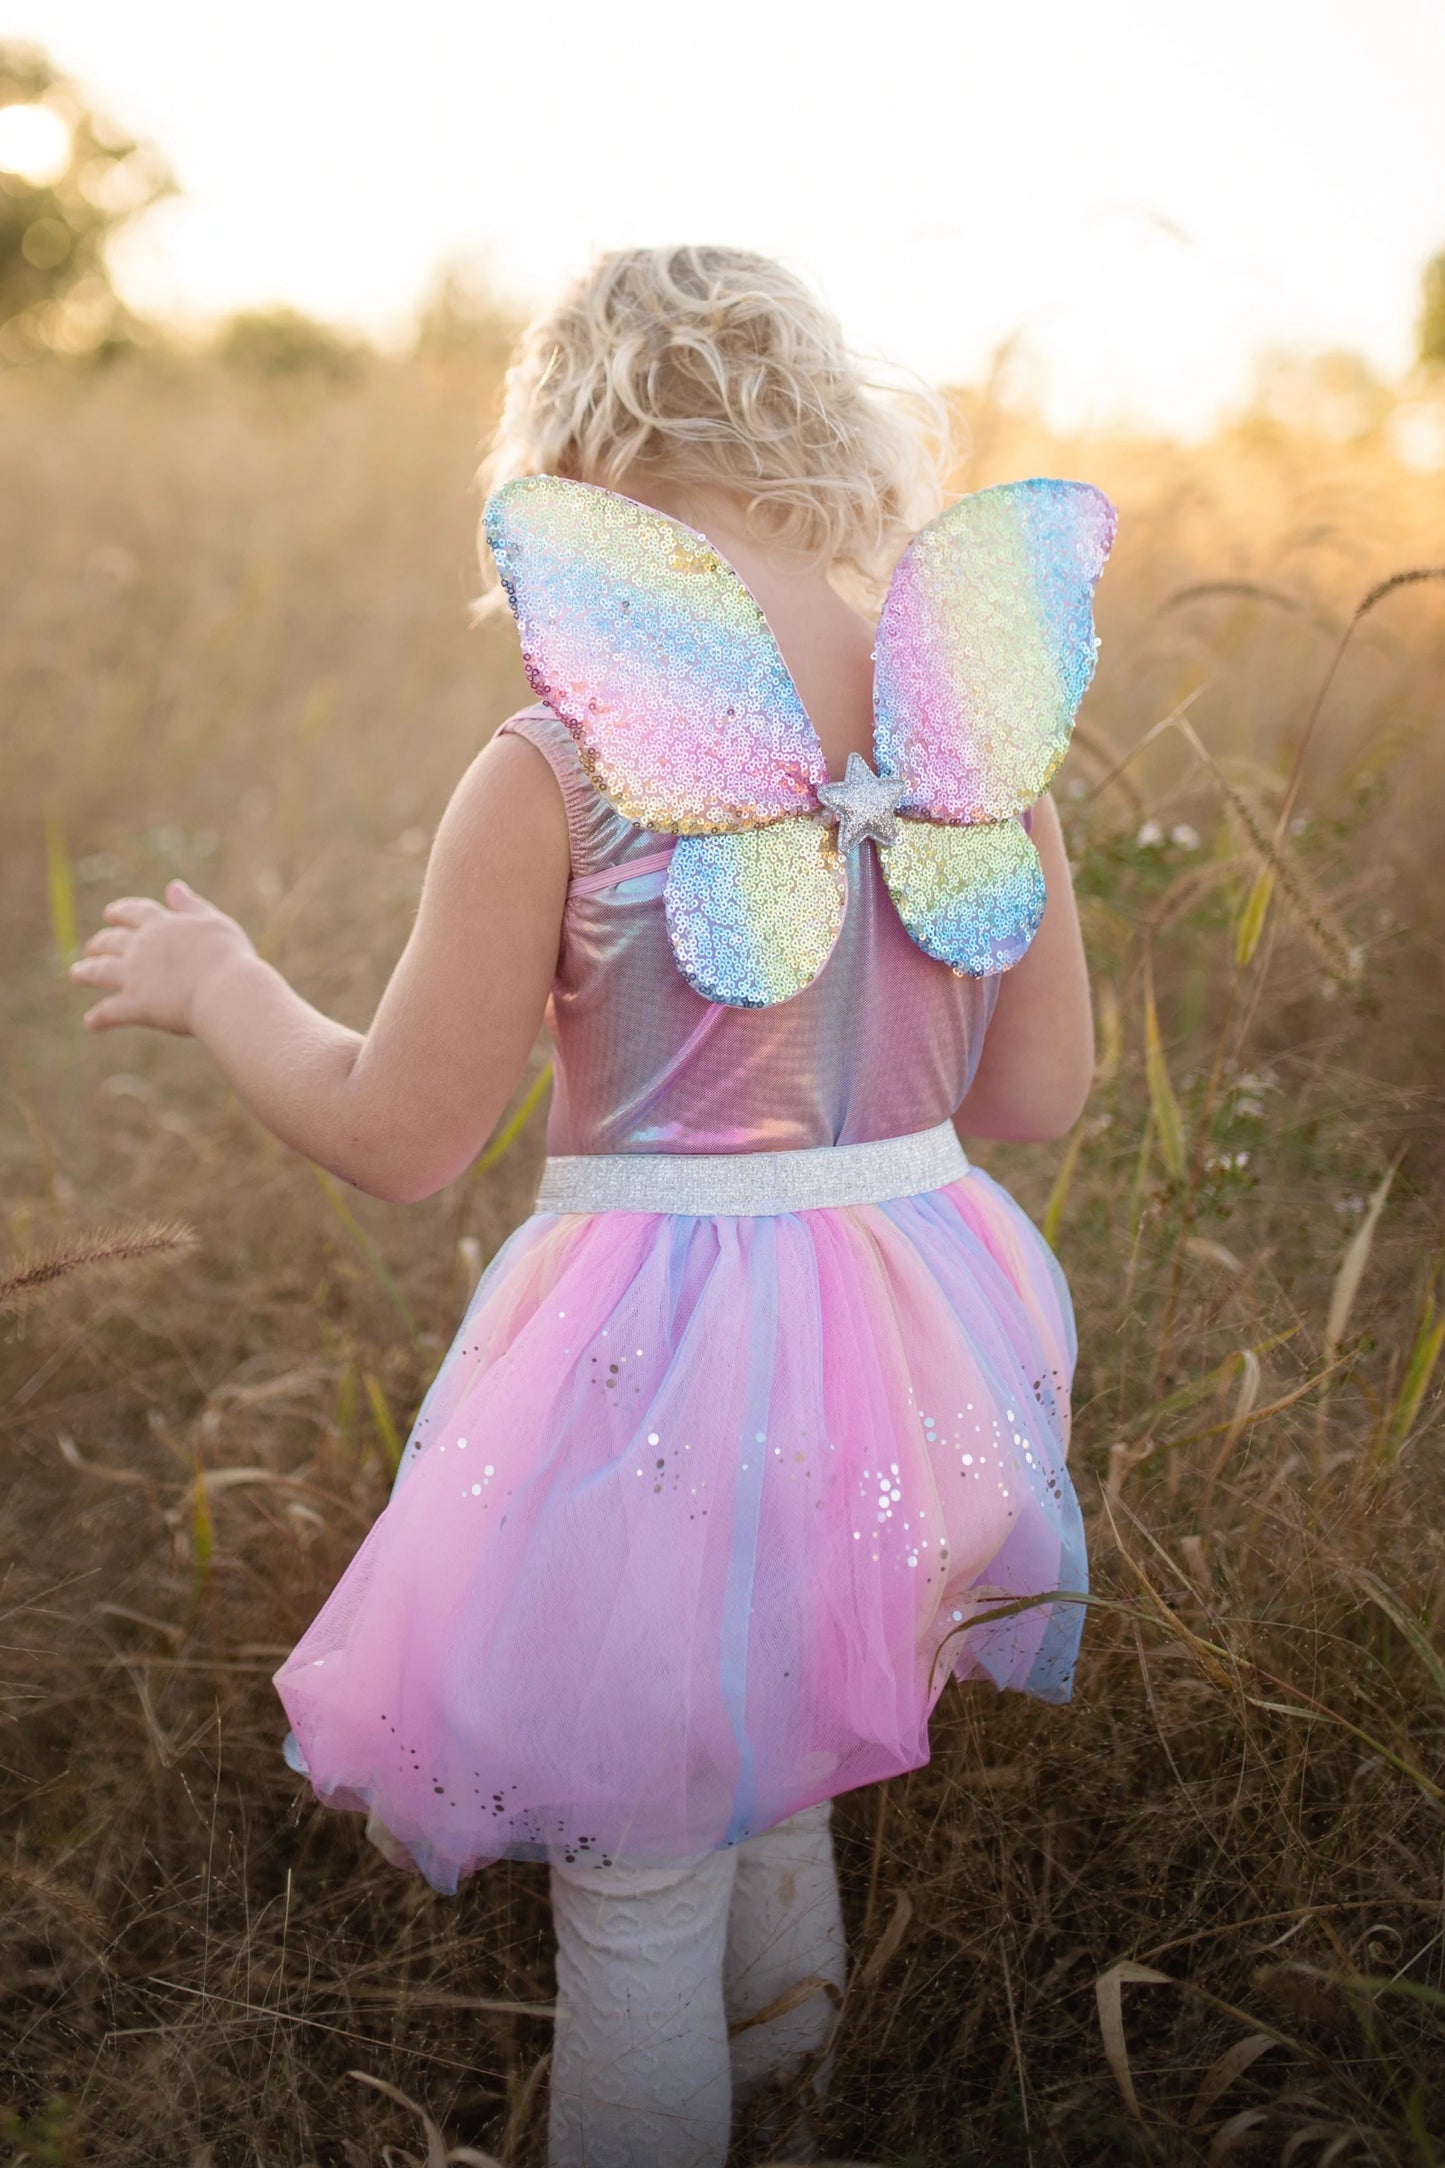 Dress Up - Rainbow Sequin Skirt, Wings & Wand